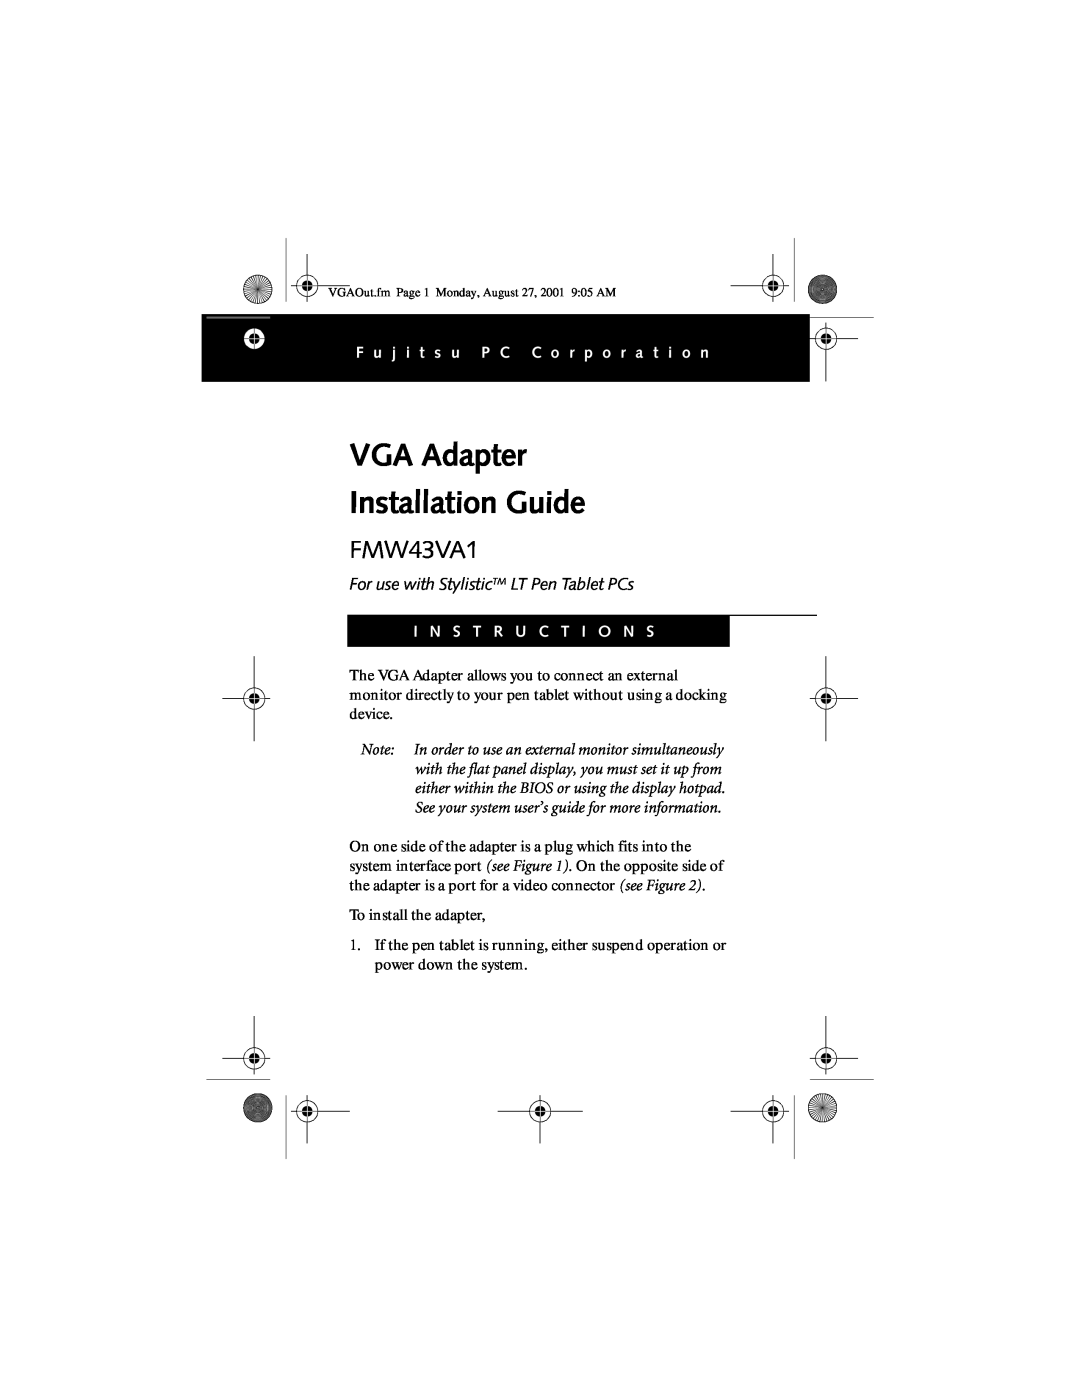 Fujitsu FMW43VA1 manual VGA Adapter Installation Guide, For use with StylisticTM LT Pen Tablet PCs 